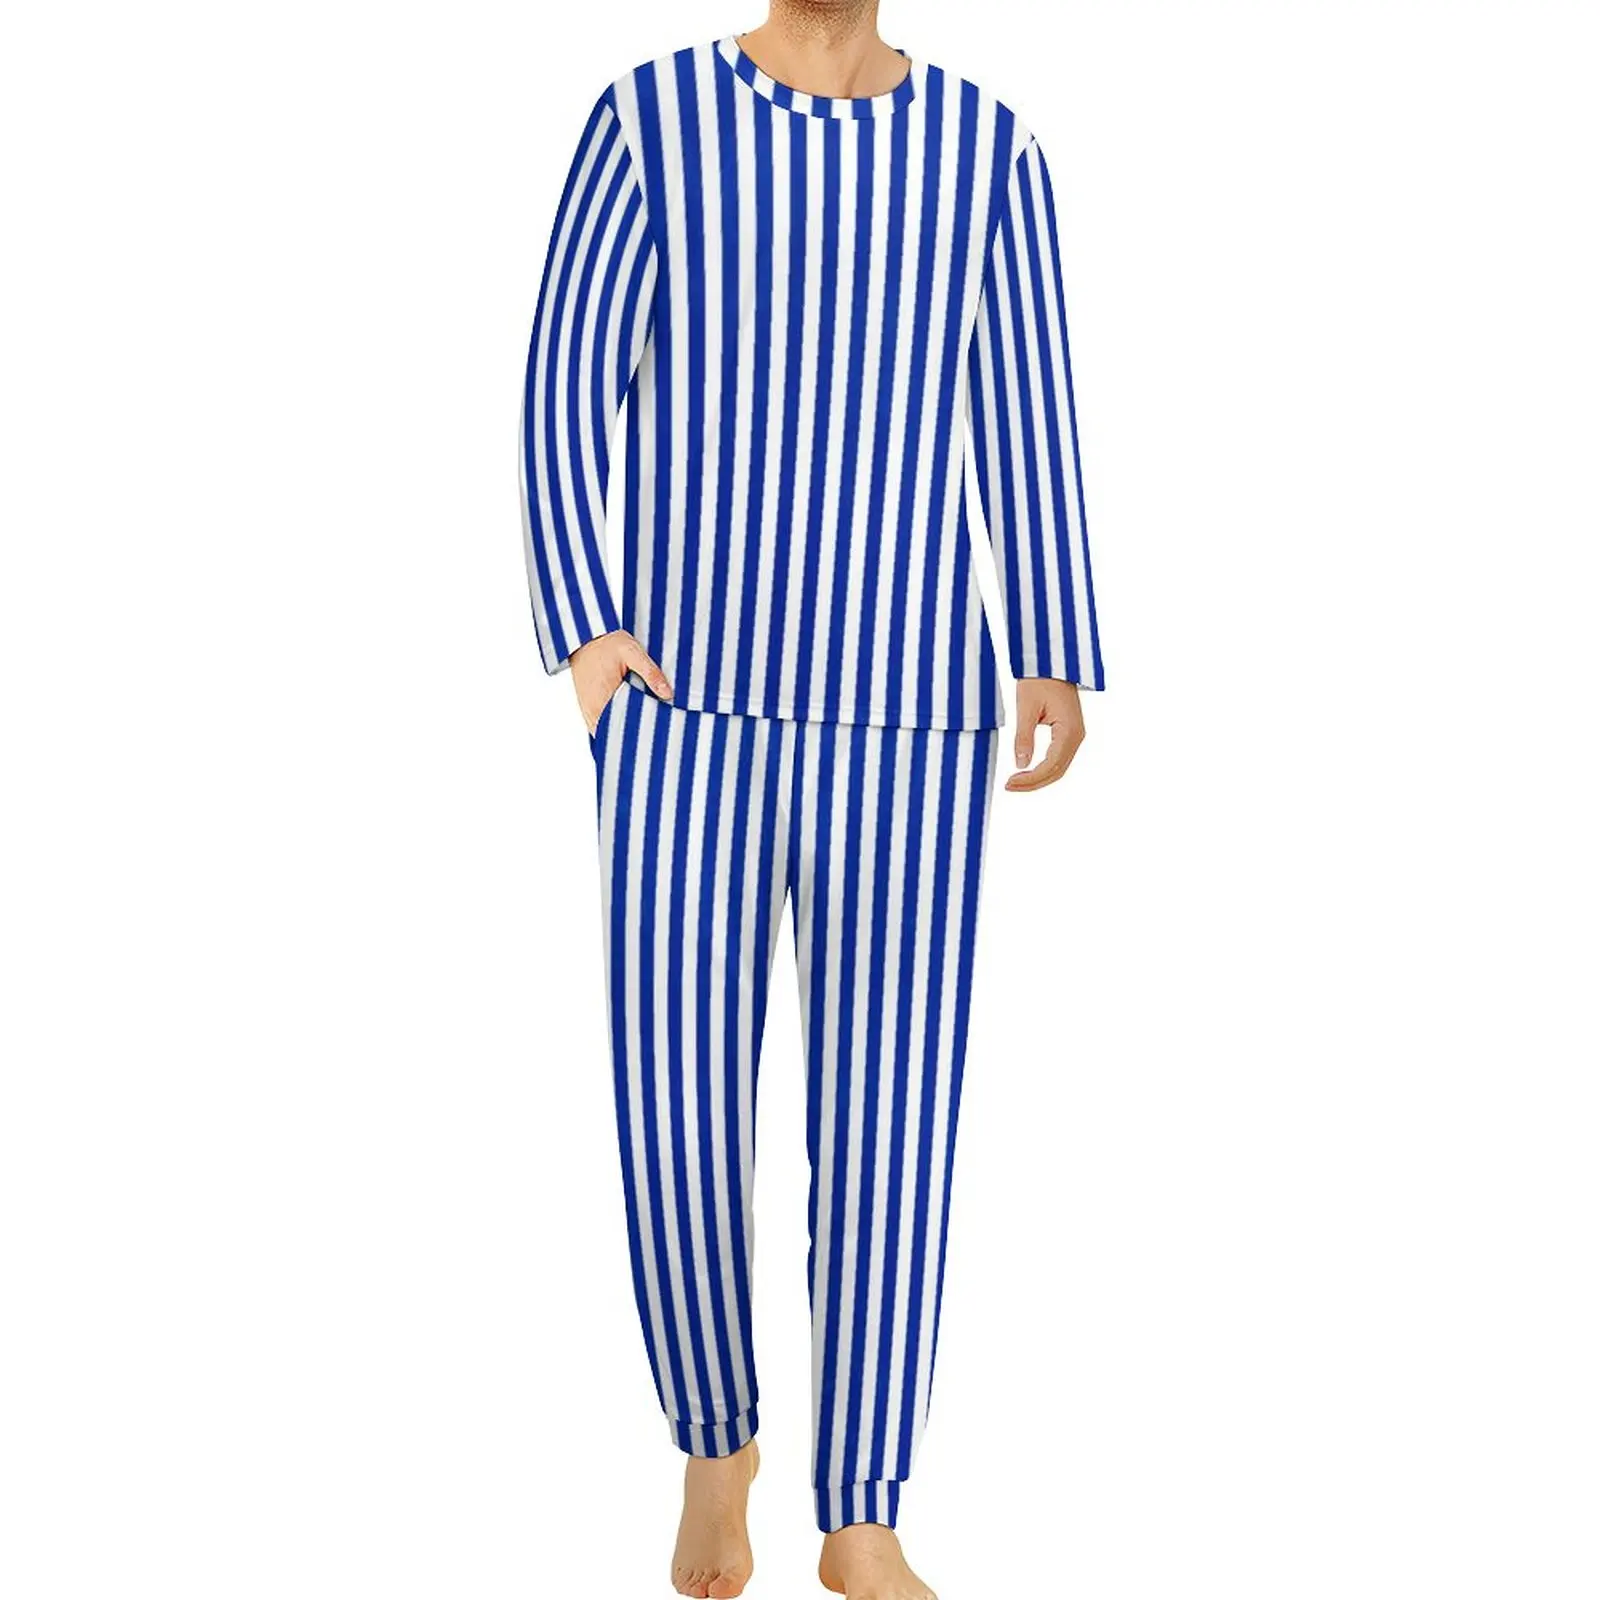 

Nautical Blue And White Pajamas Spring 2 Pieces Vertical Stripes Fashion Pajama Sets Long Sleeves Home Print Sleepwear Big Size